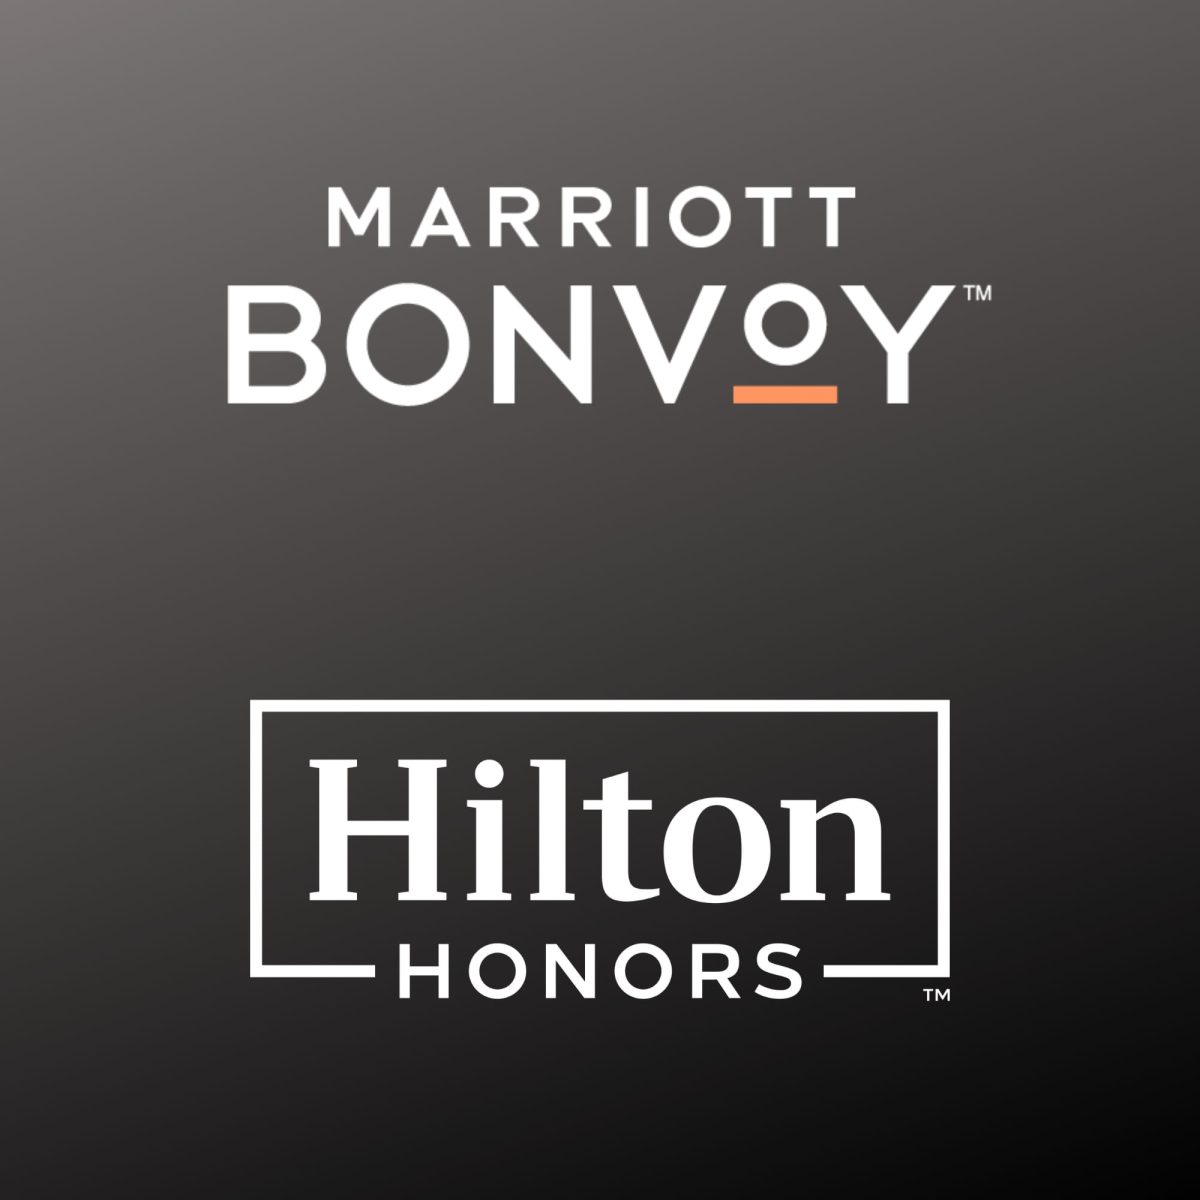 Marriott Bonvoy Hilton Honors logo